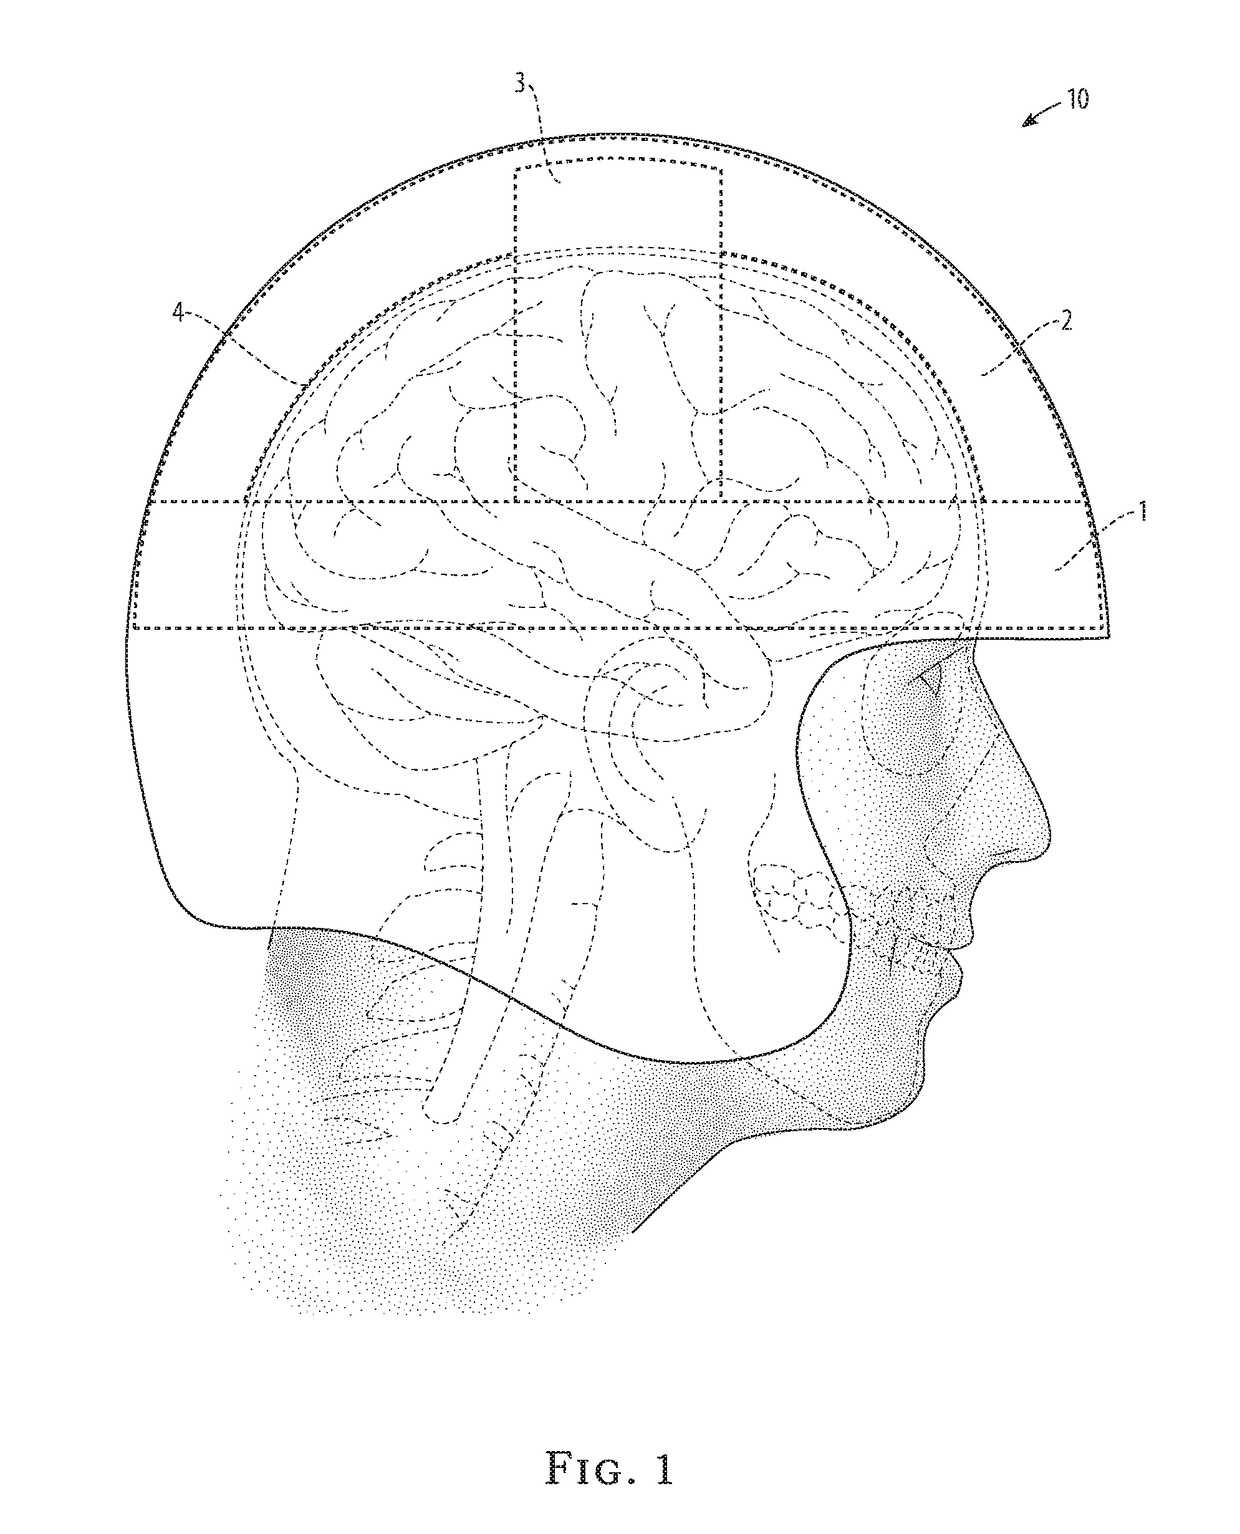 Brain-protecting helmet lining apparatus and method